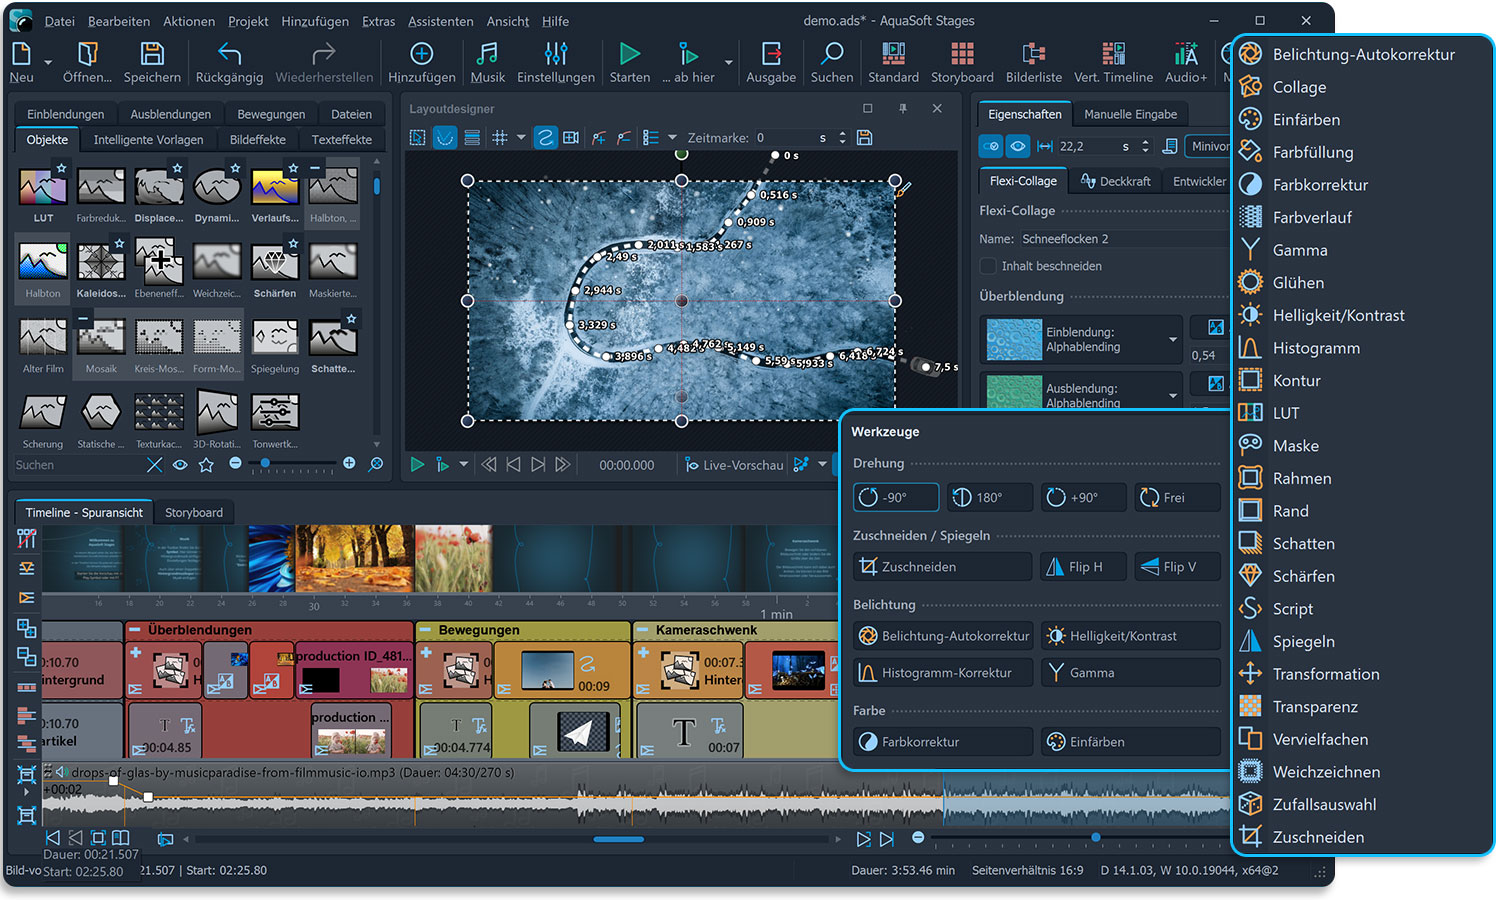 AquaSoft Video Vision 14.2.11 for ios download free